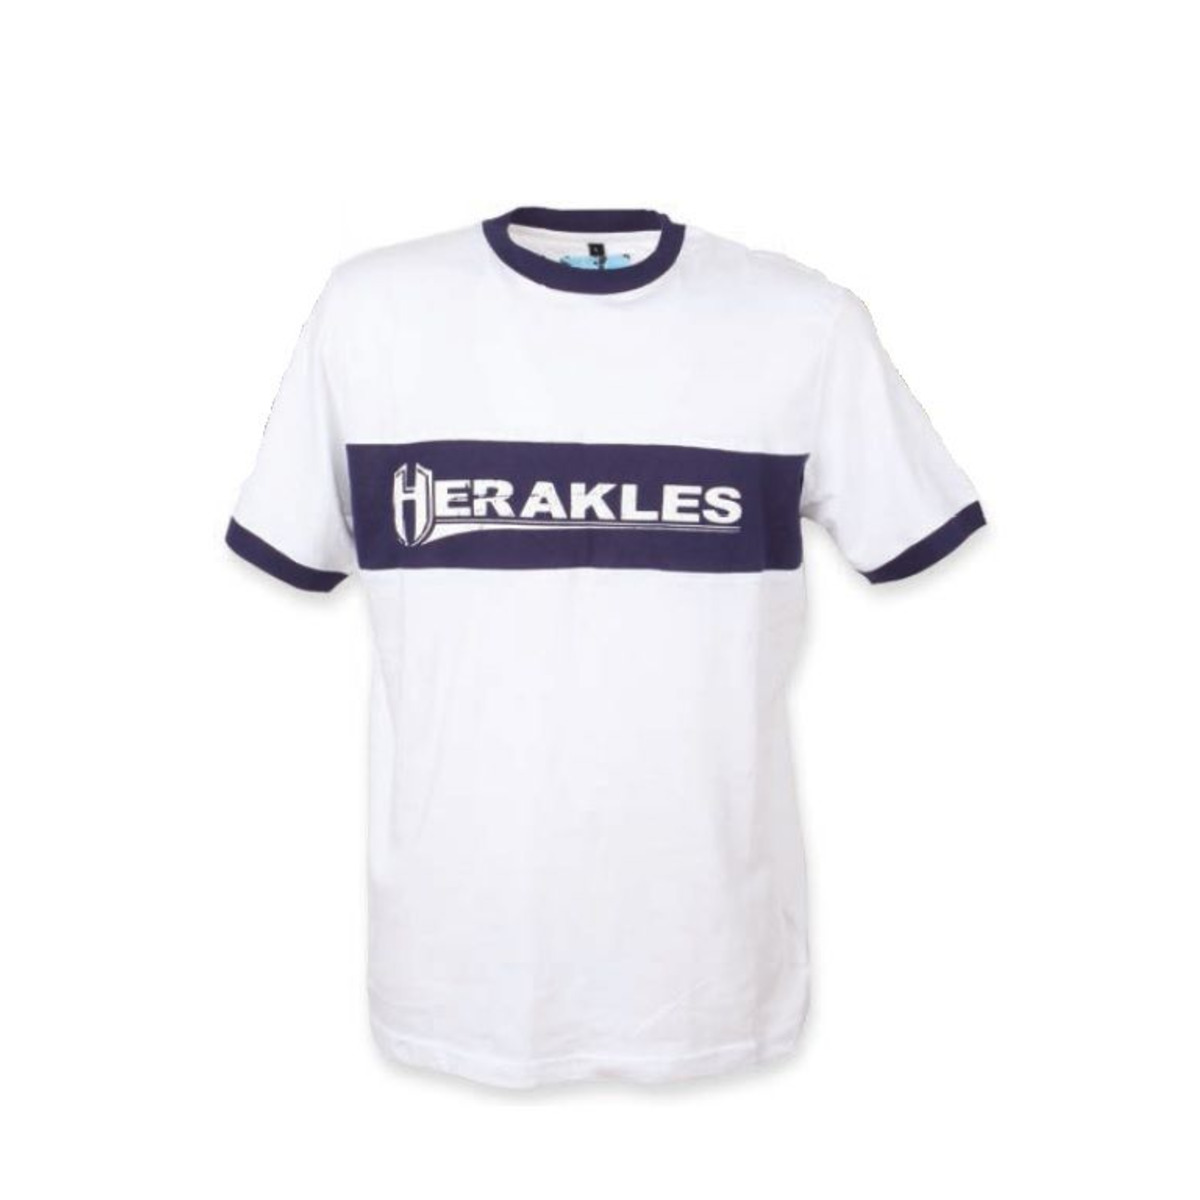 Herakles Camiseta Blanca - Azul - S